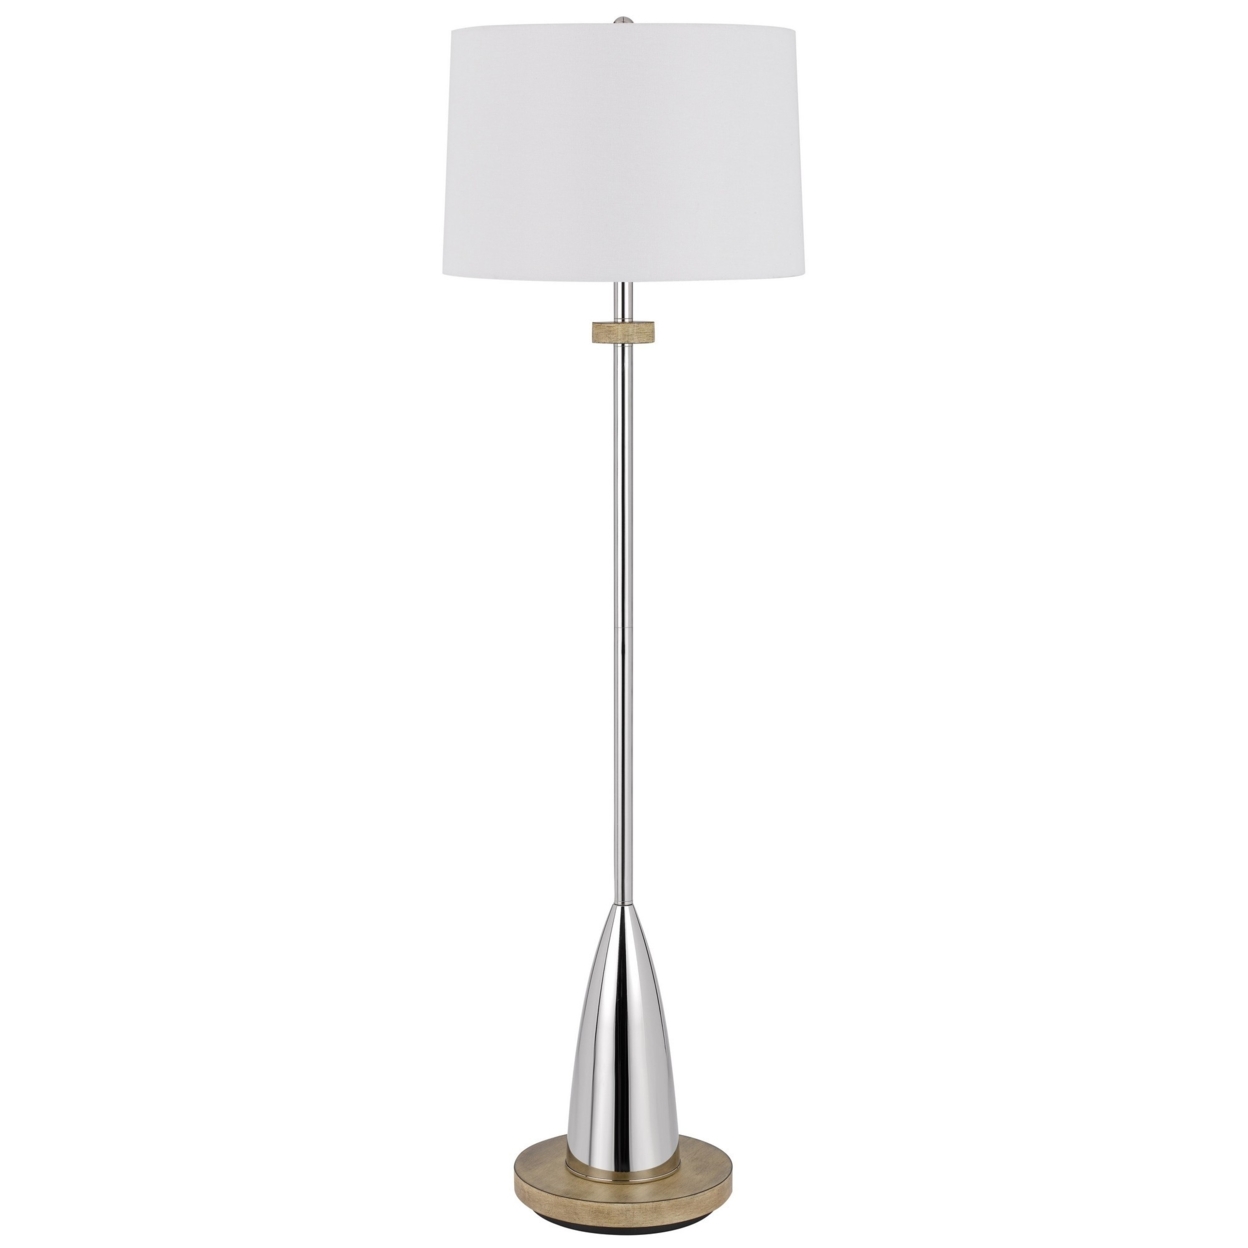 Charlie 61 Inch Modern Floor Lamp, Drum Shade, Glossy Chrome, White, Brown- Saltoro Sherpi